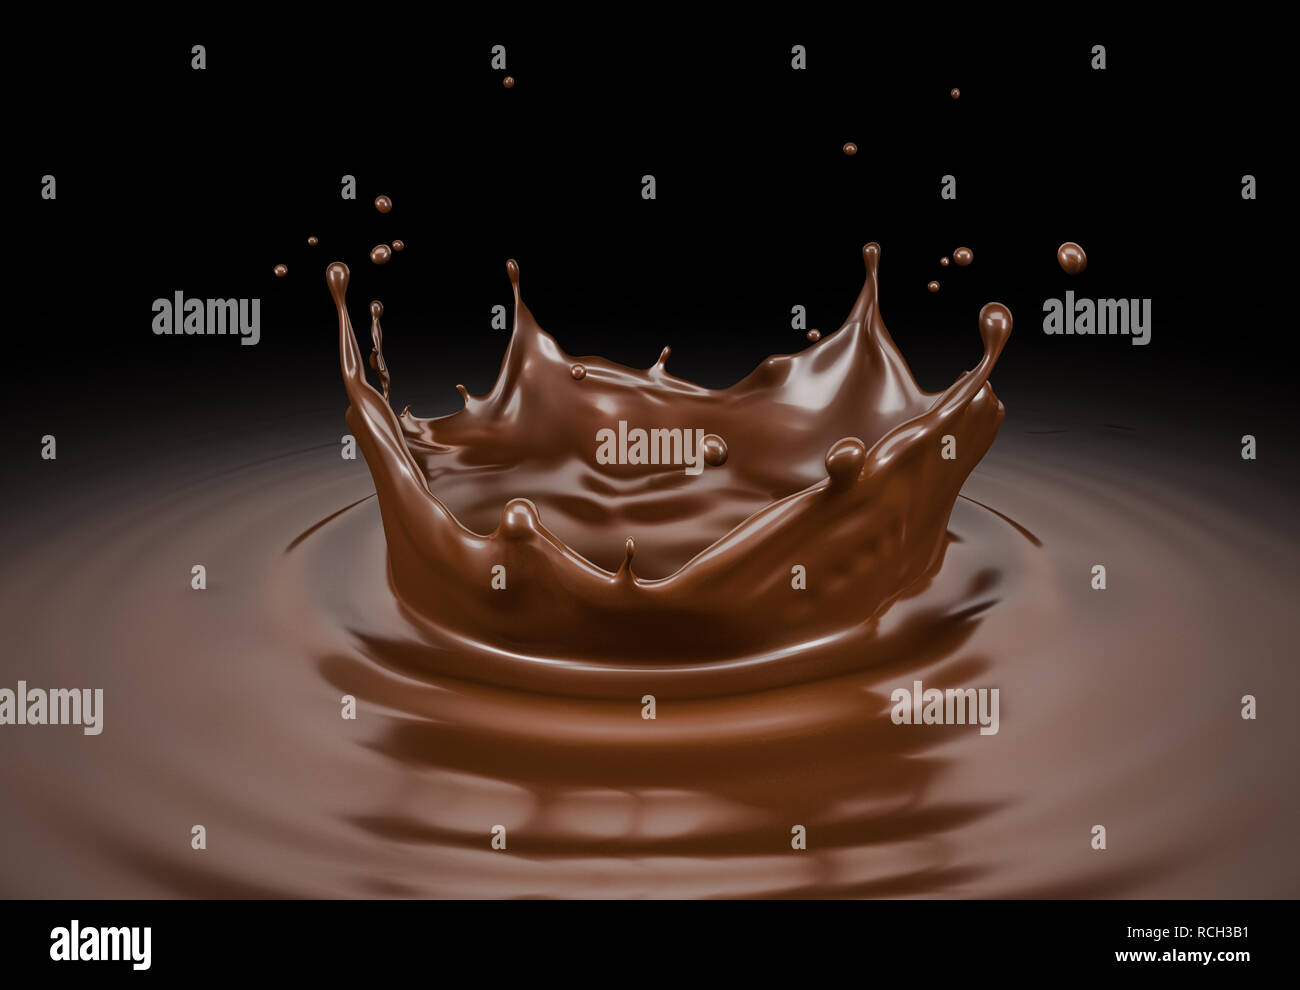 Liquid chocolate crown splash with ripples. Bird eye view. On black background. Stock Photo